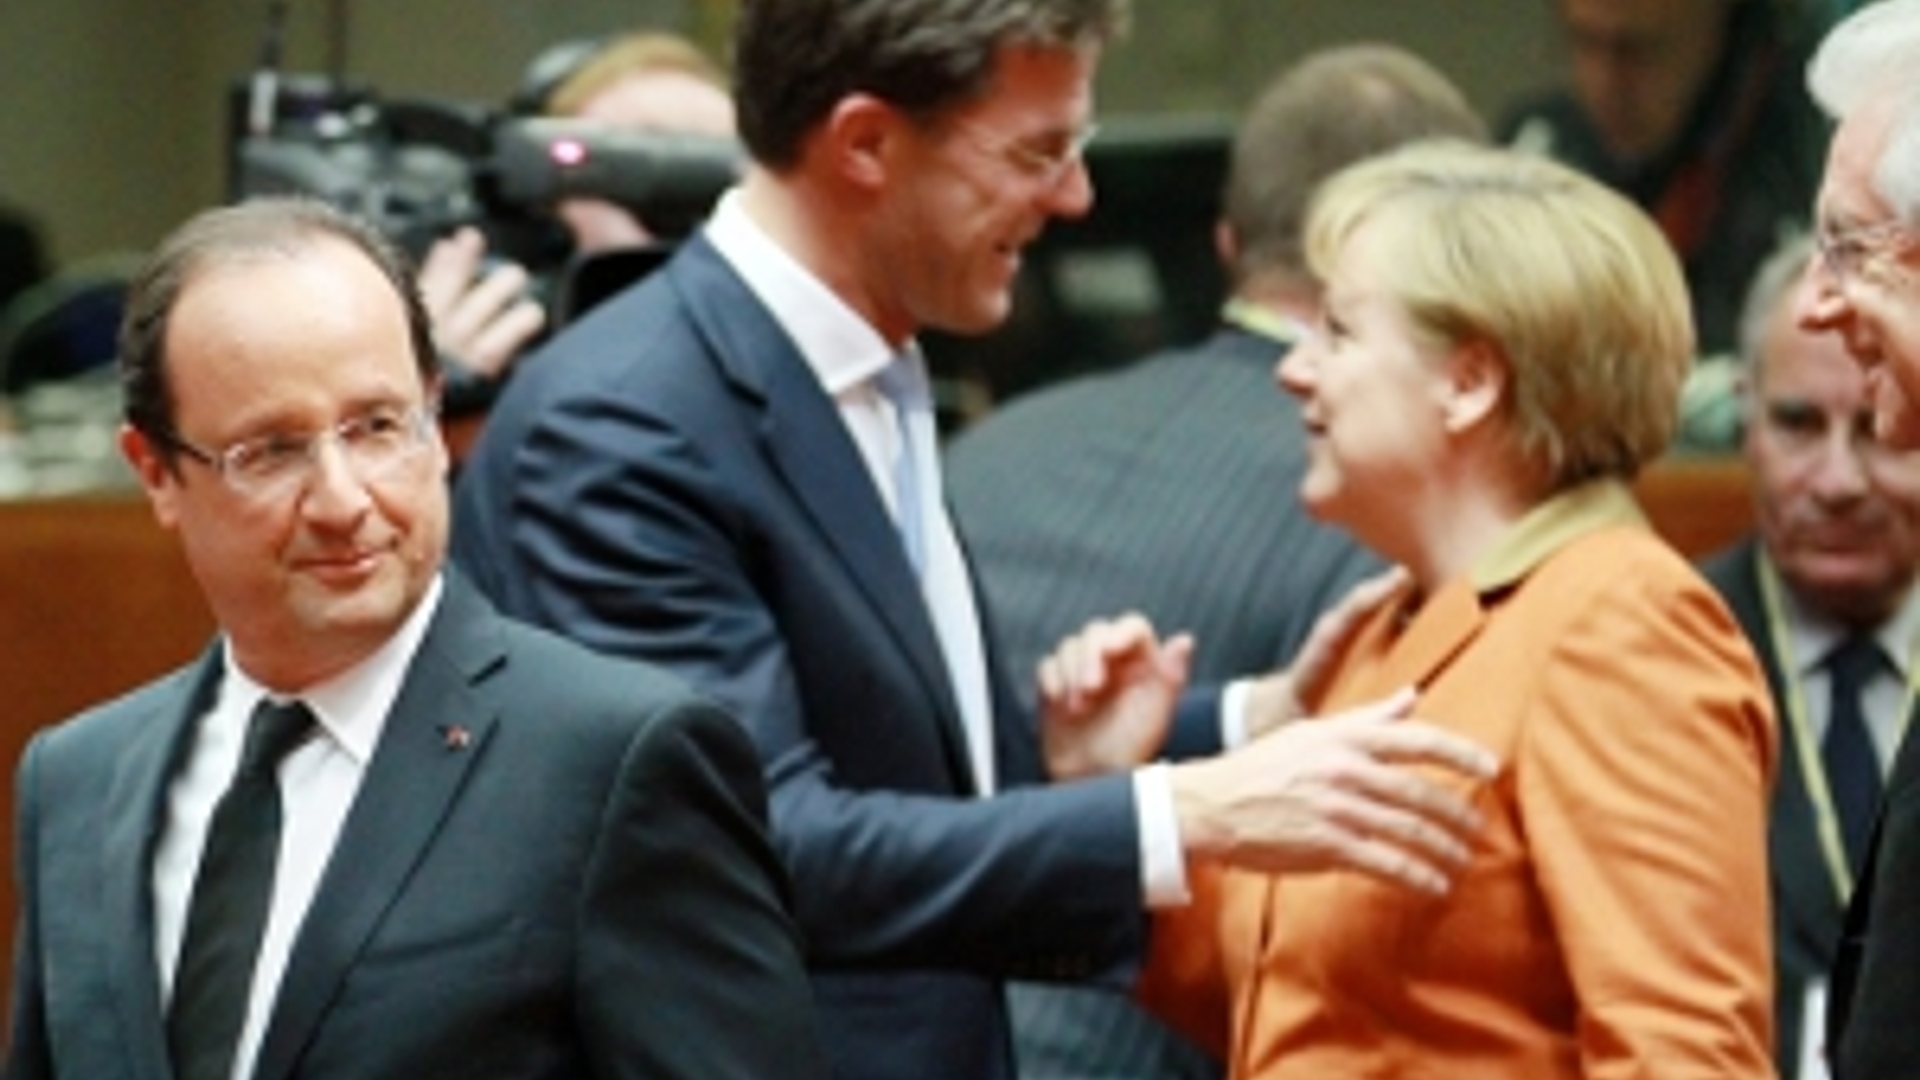 ANP-Rutte_Merkel_Hollande300.jpg